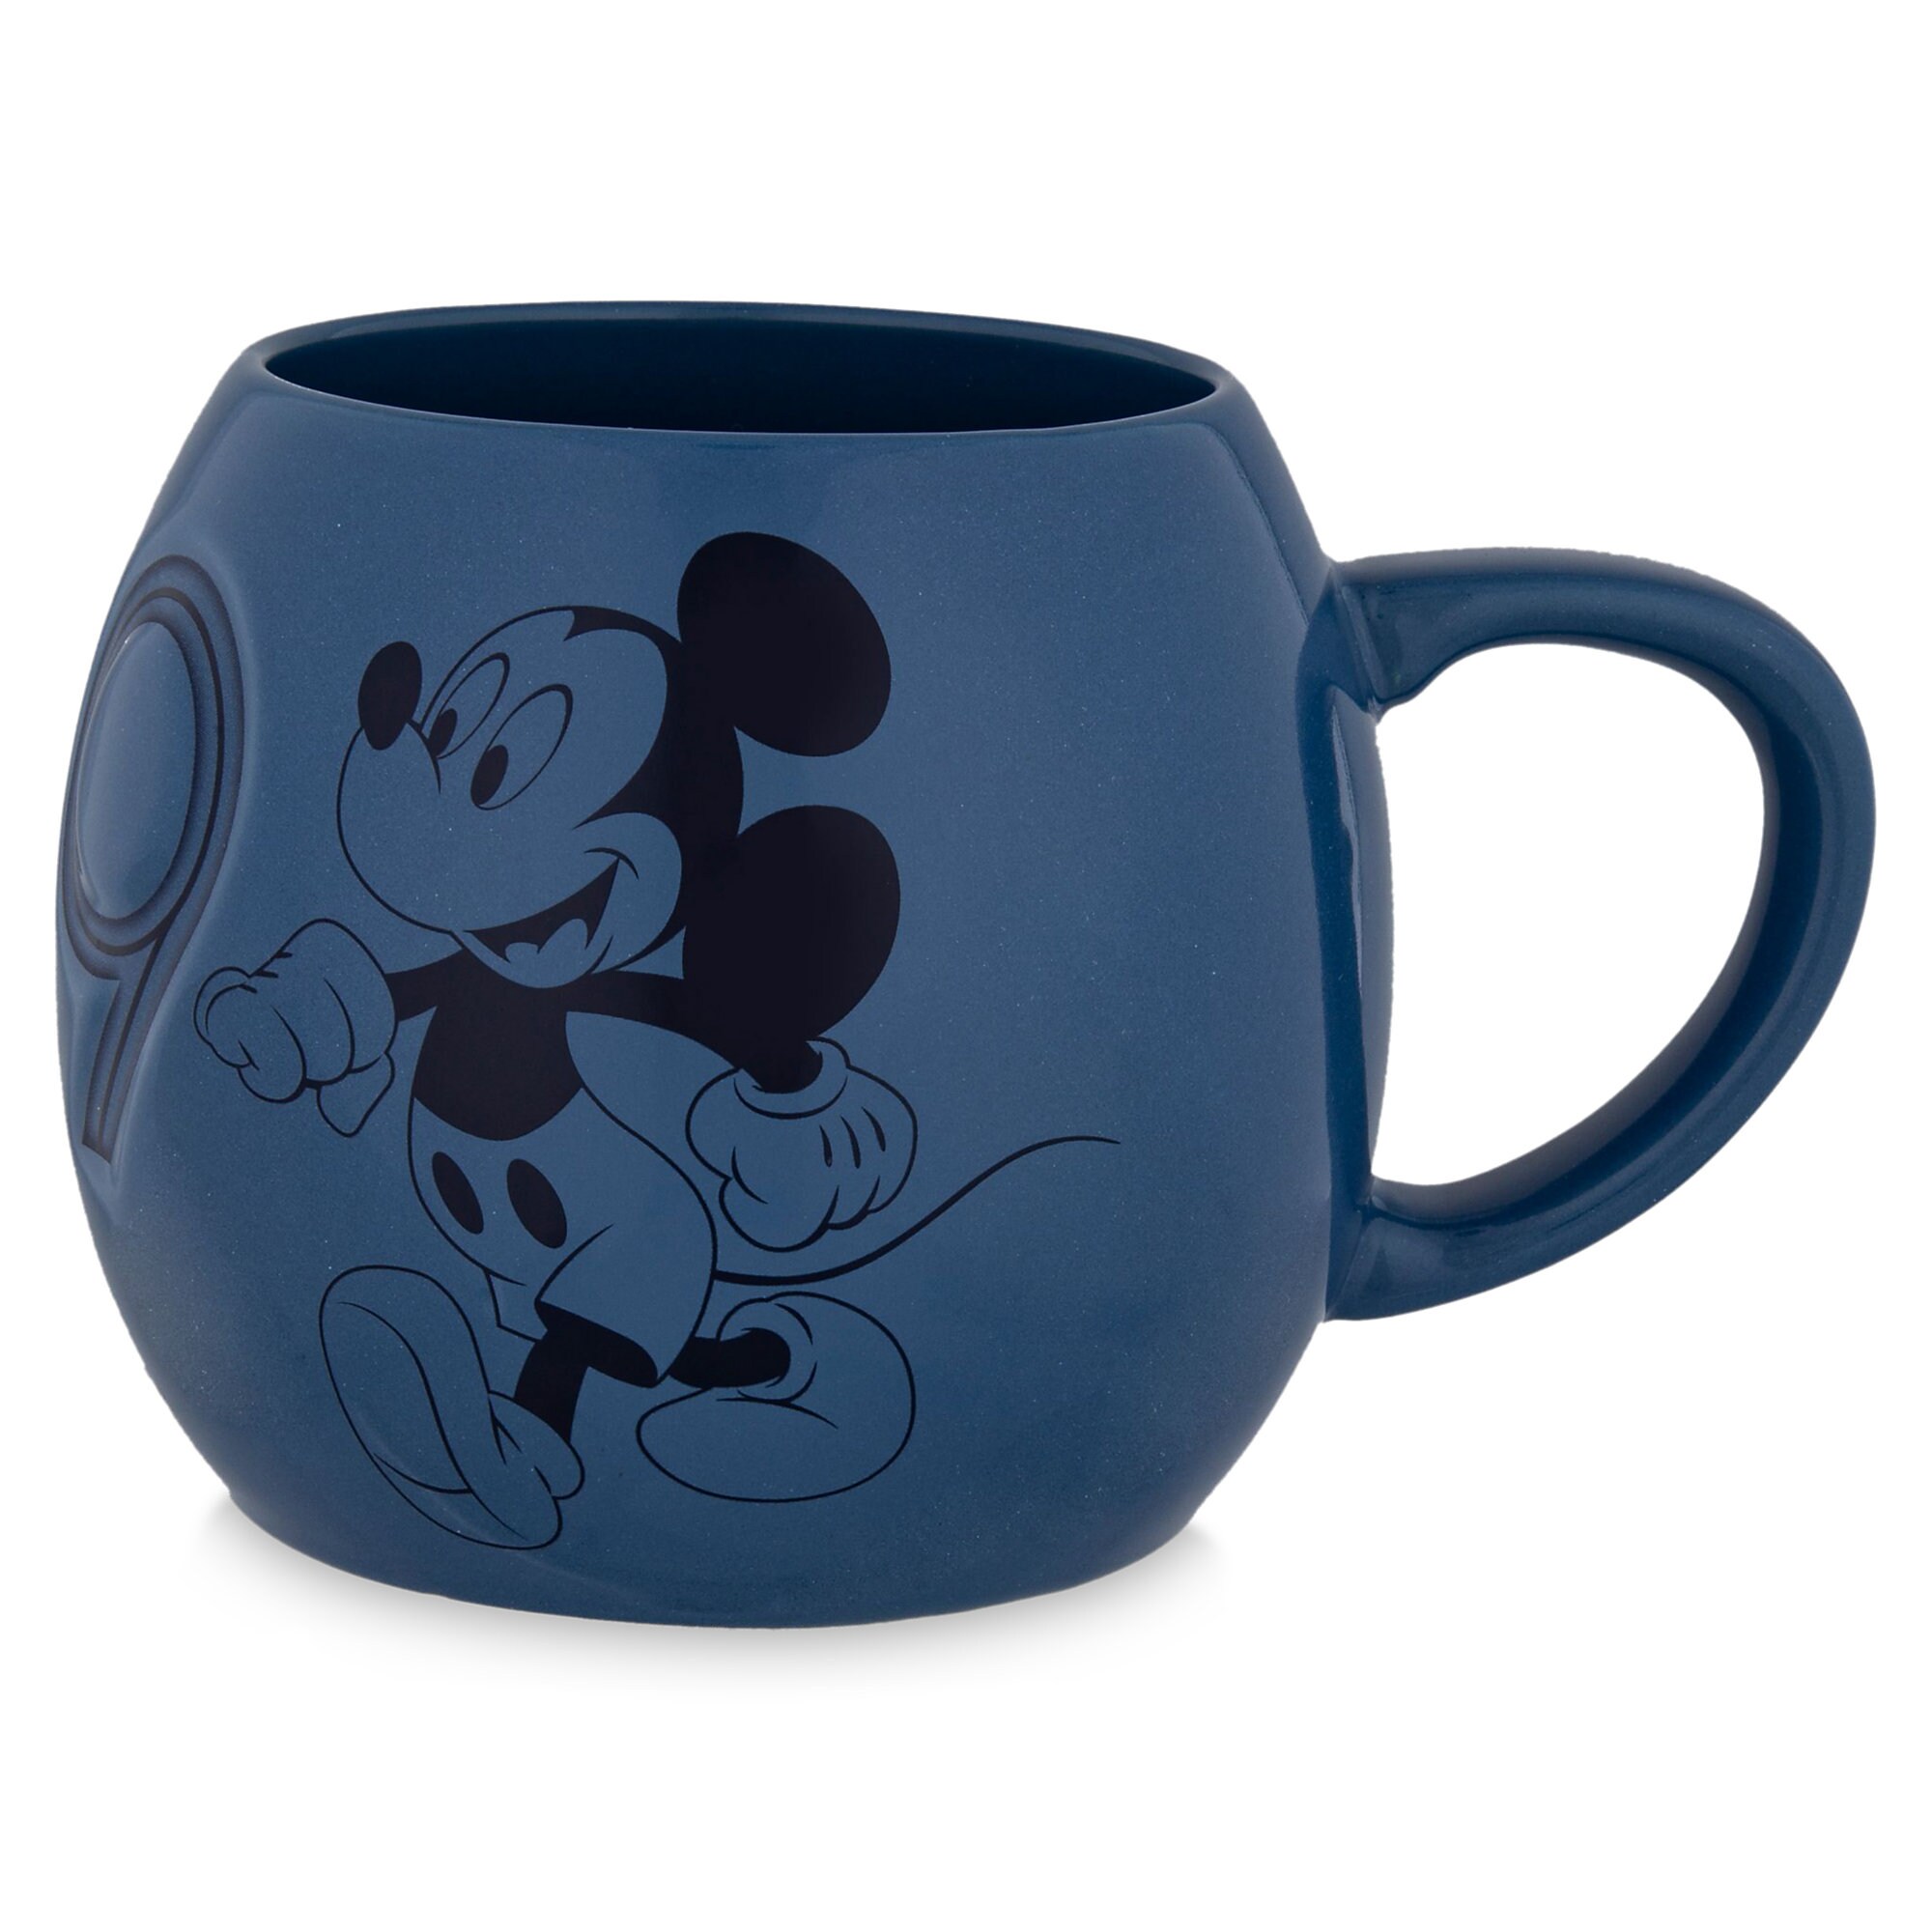 Mickey Mouse Mug - Disneyland 2019